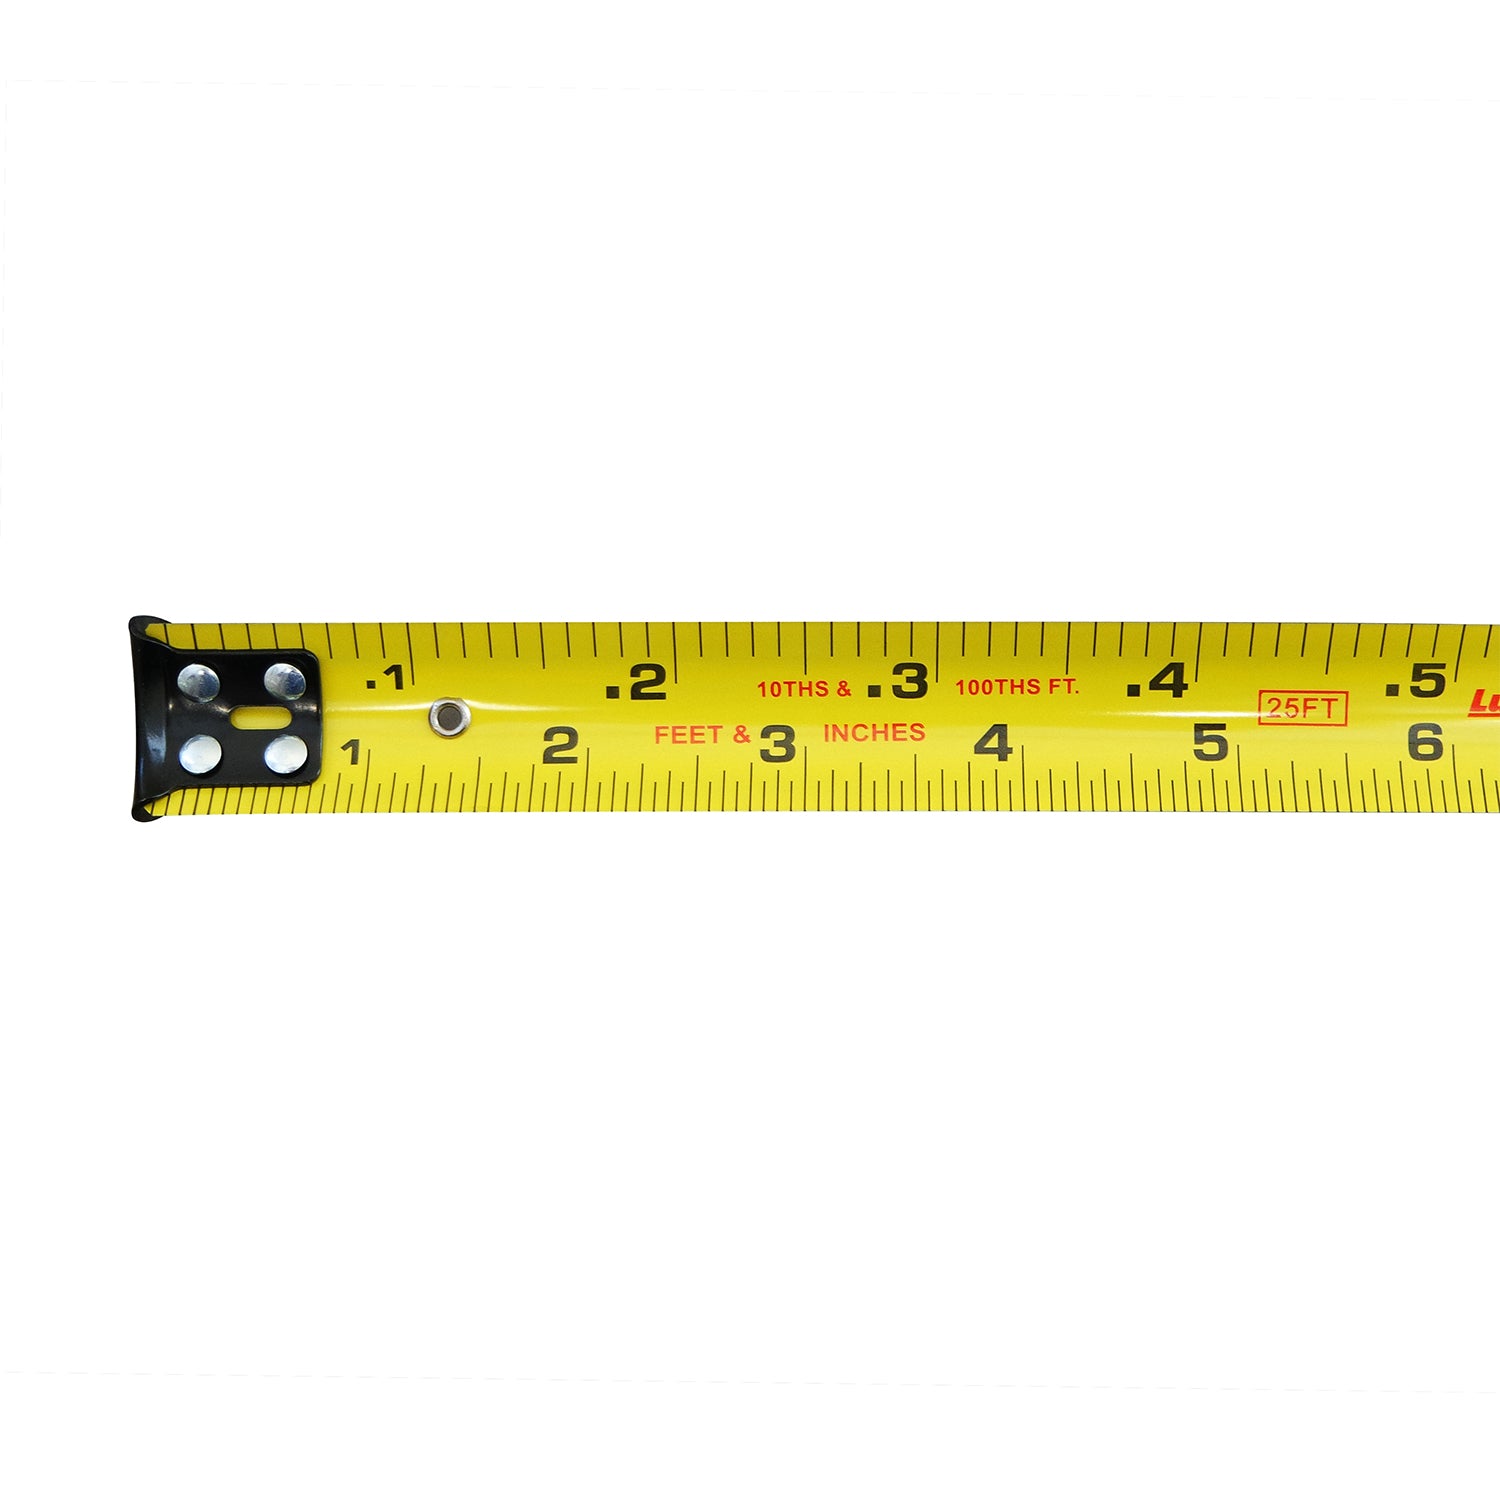 Lufkin 25' Engineer's Hi-Viz Orange Tape Measure (In/Ft/10ths